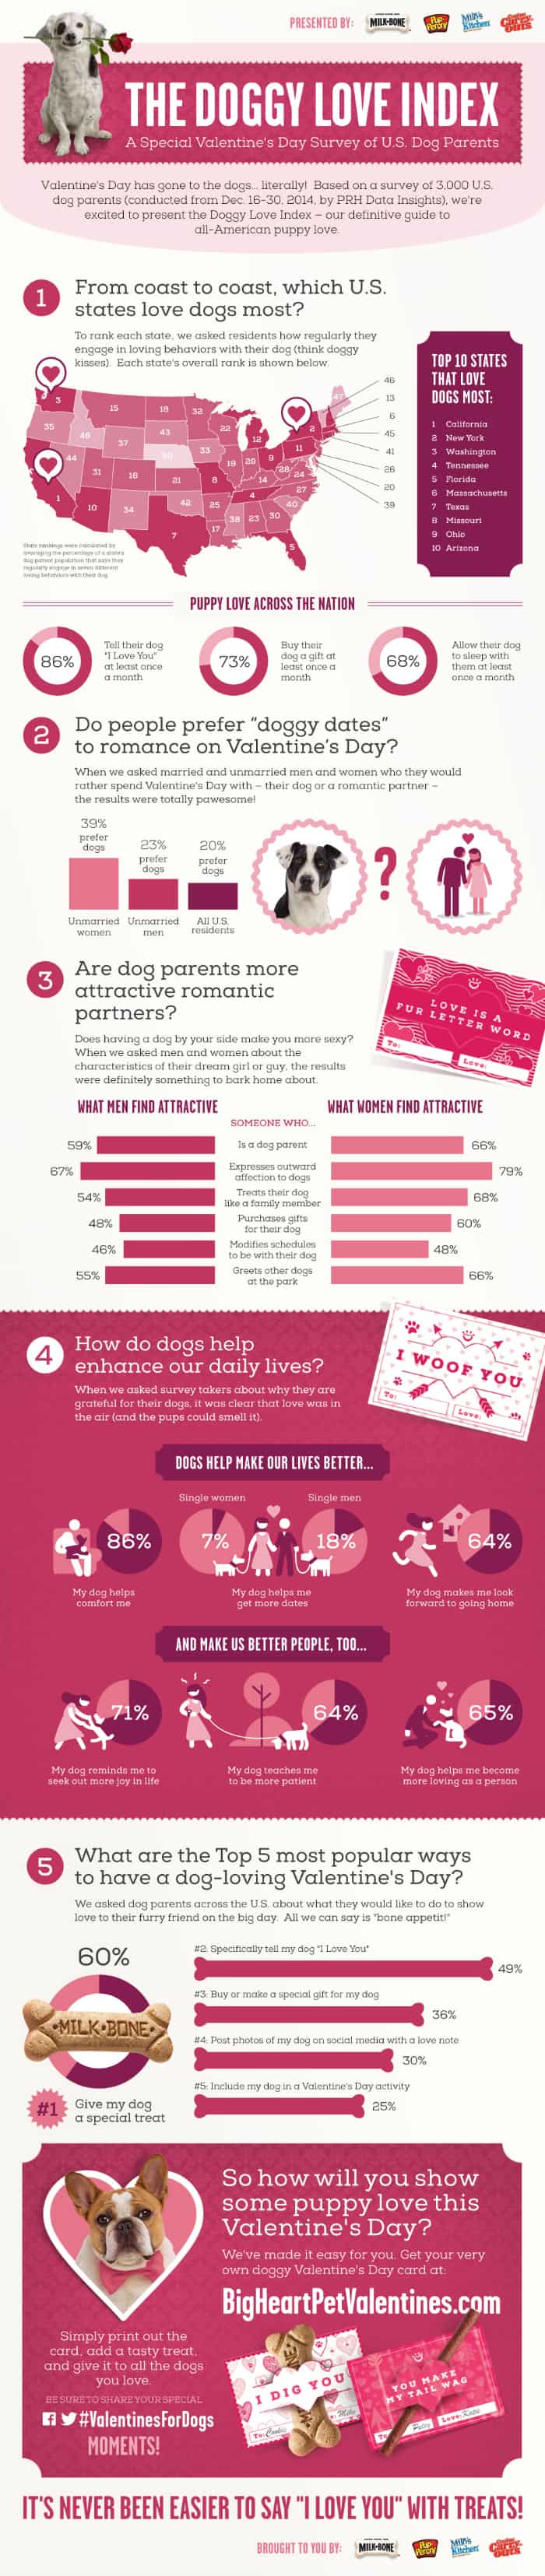 doggylove_infographic